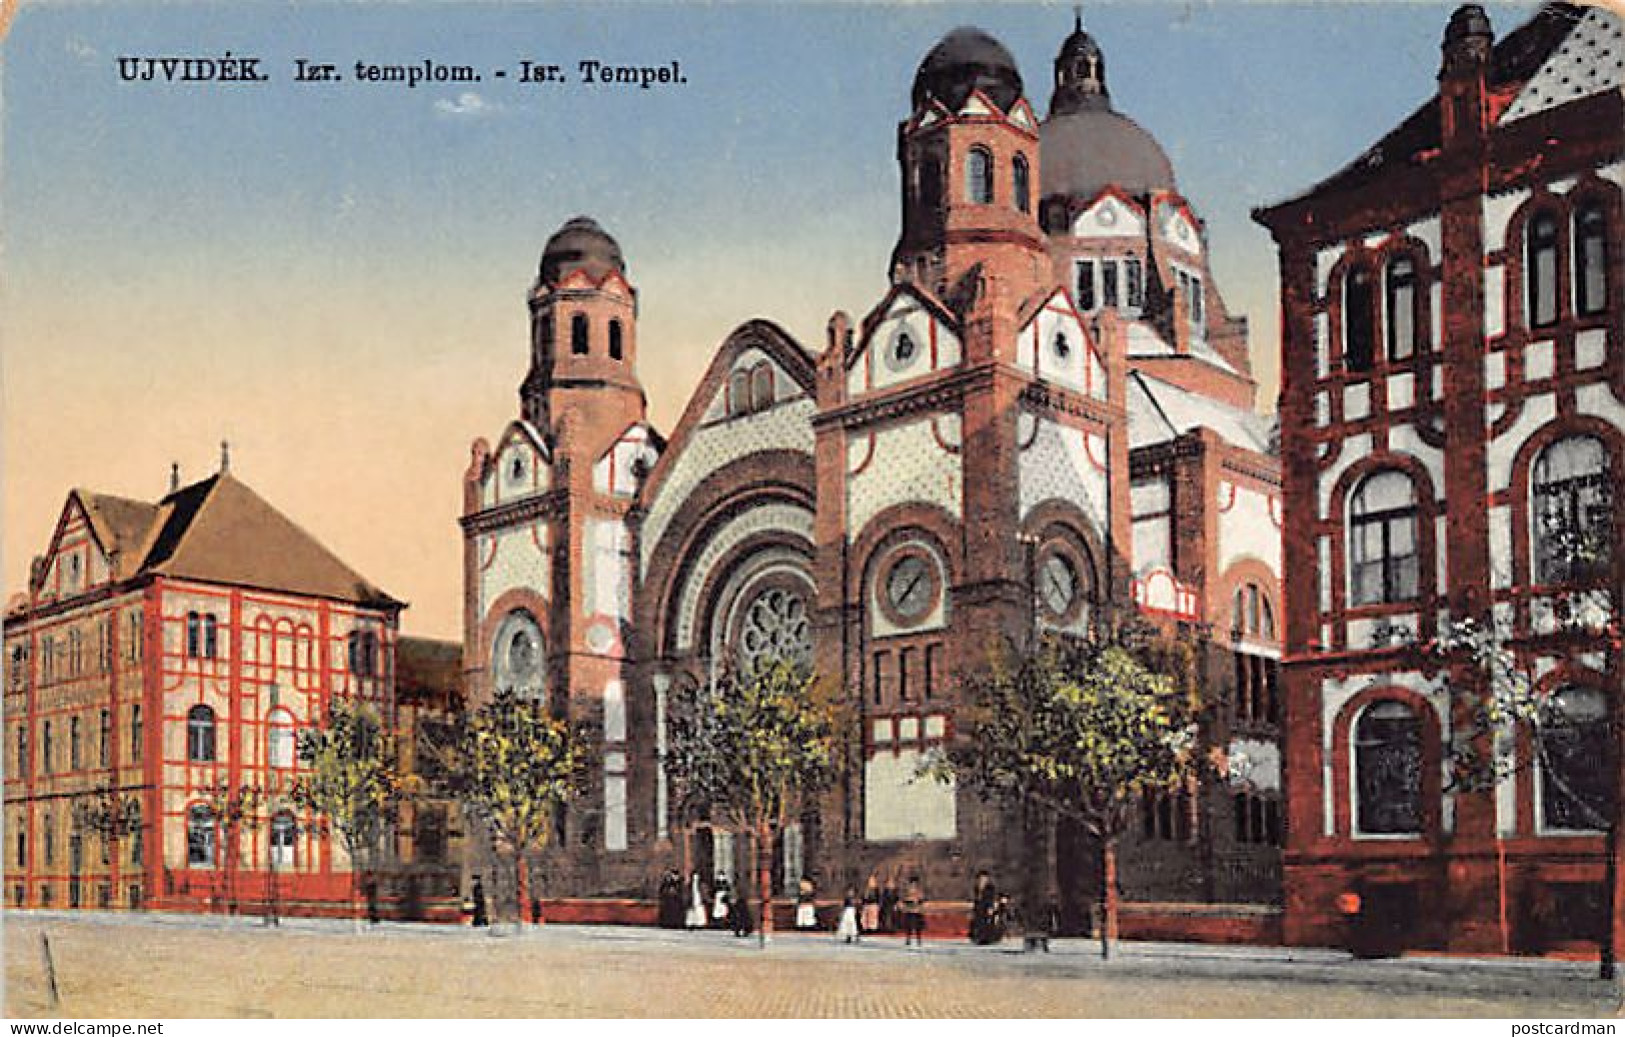 Serbia - NOVI SAD Újvidék - The Synagogue - Serbia